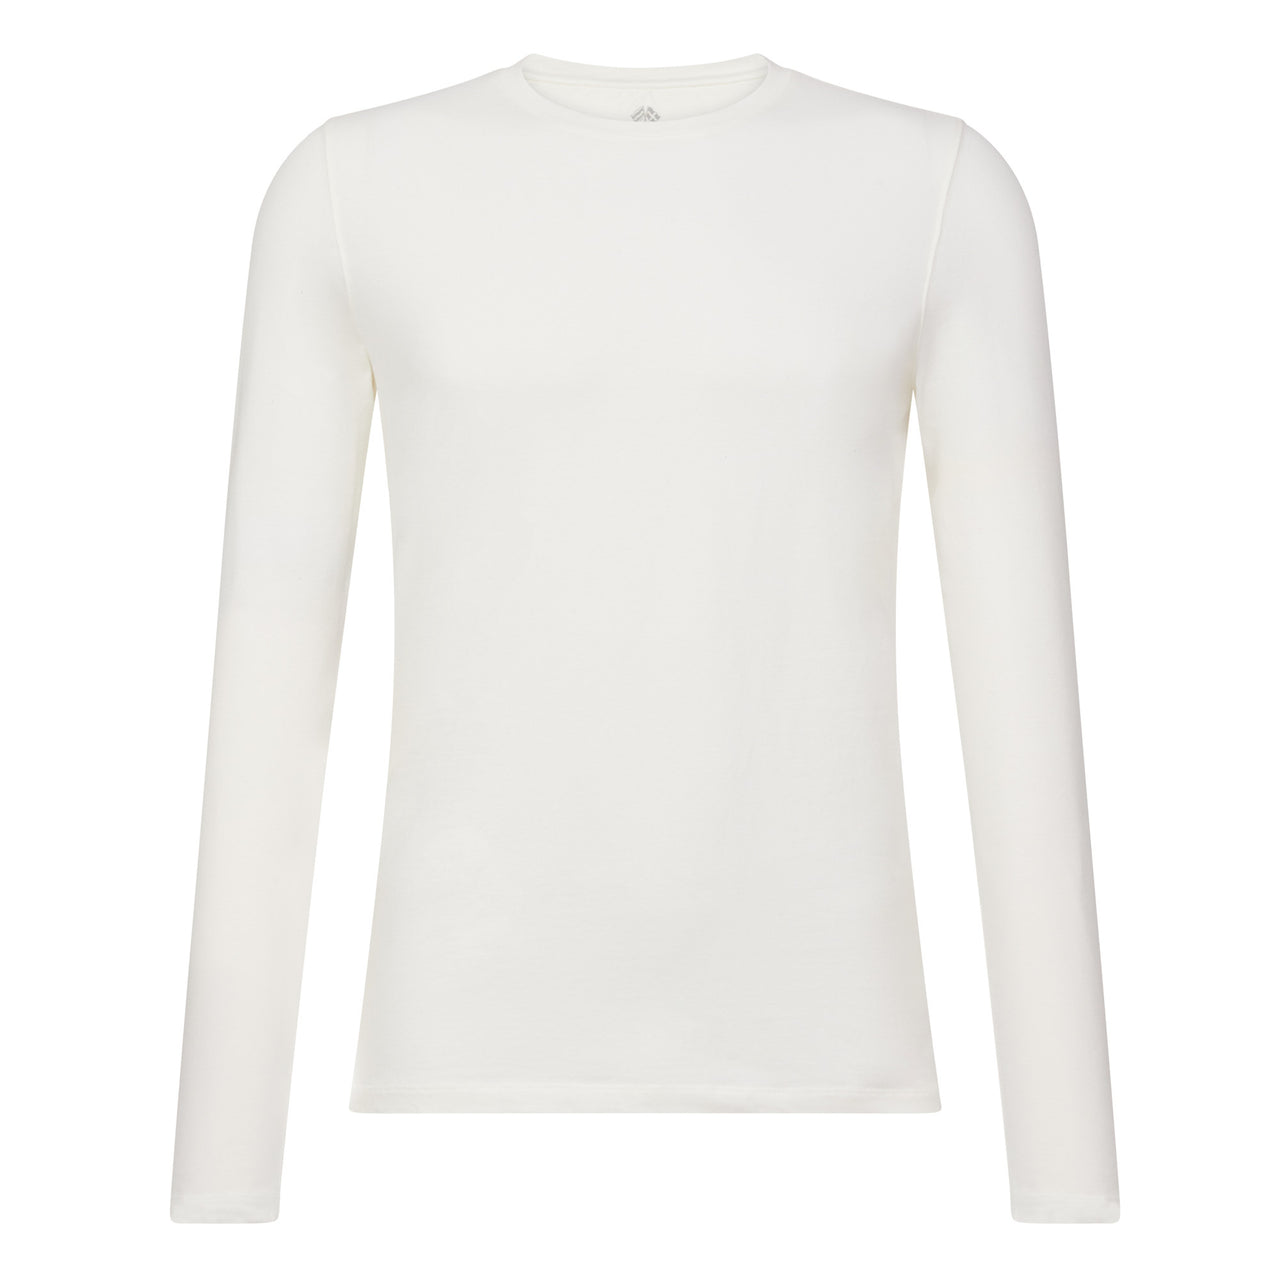 FRADI Long Sleeve Cotton Stretch T-Shirt WHITE